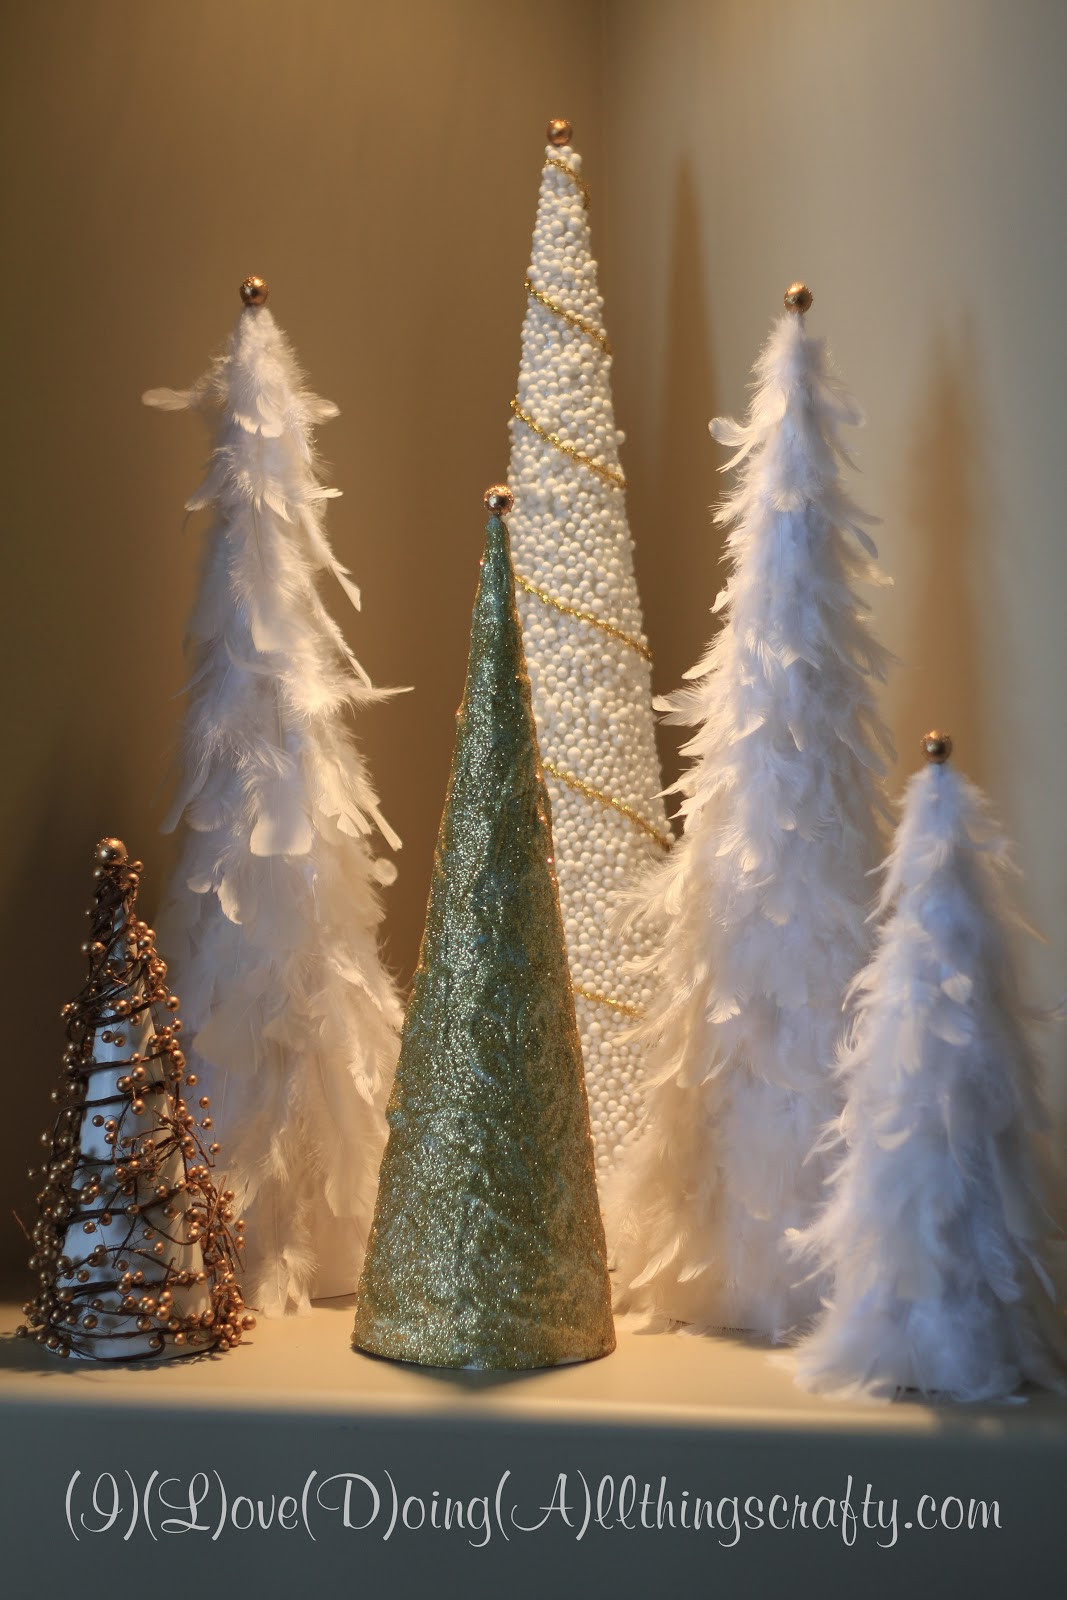 DIY Cone Christmas Trees
 I Love Doing All Things Crafty DIY Xmas Trees